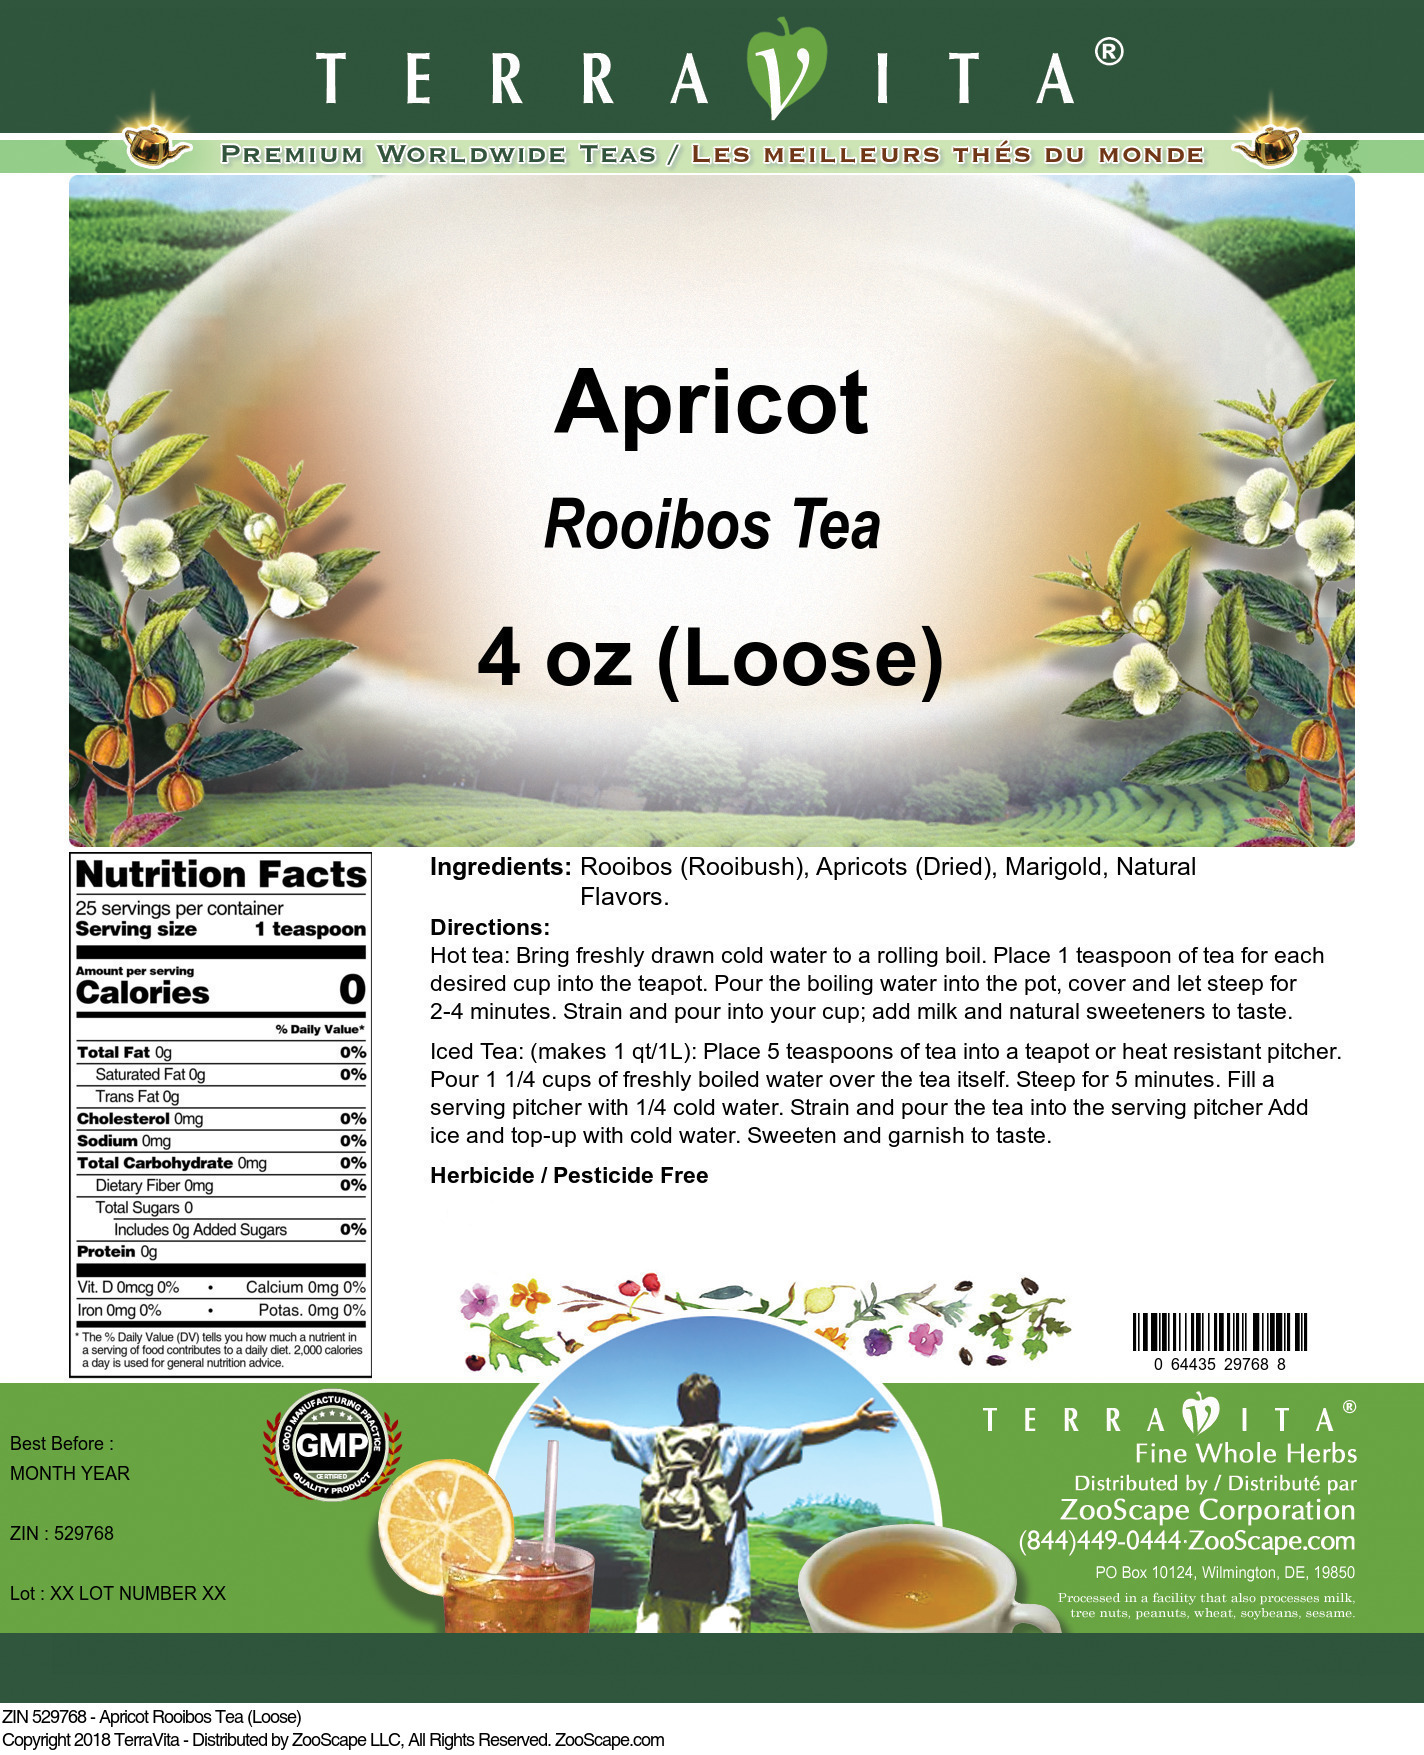 Apricot Rooibos Tea (Loose) - Label